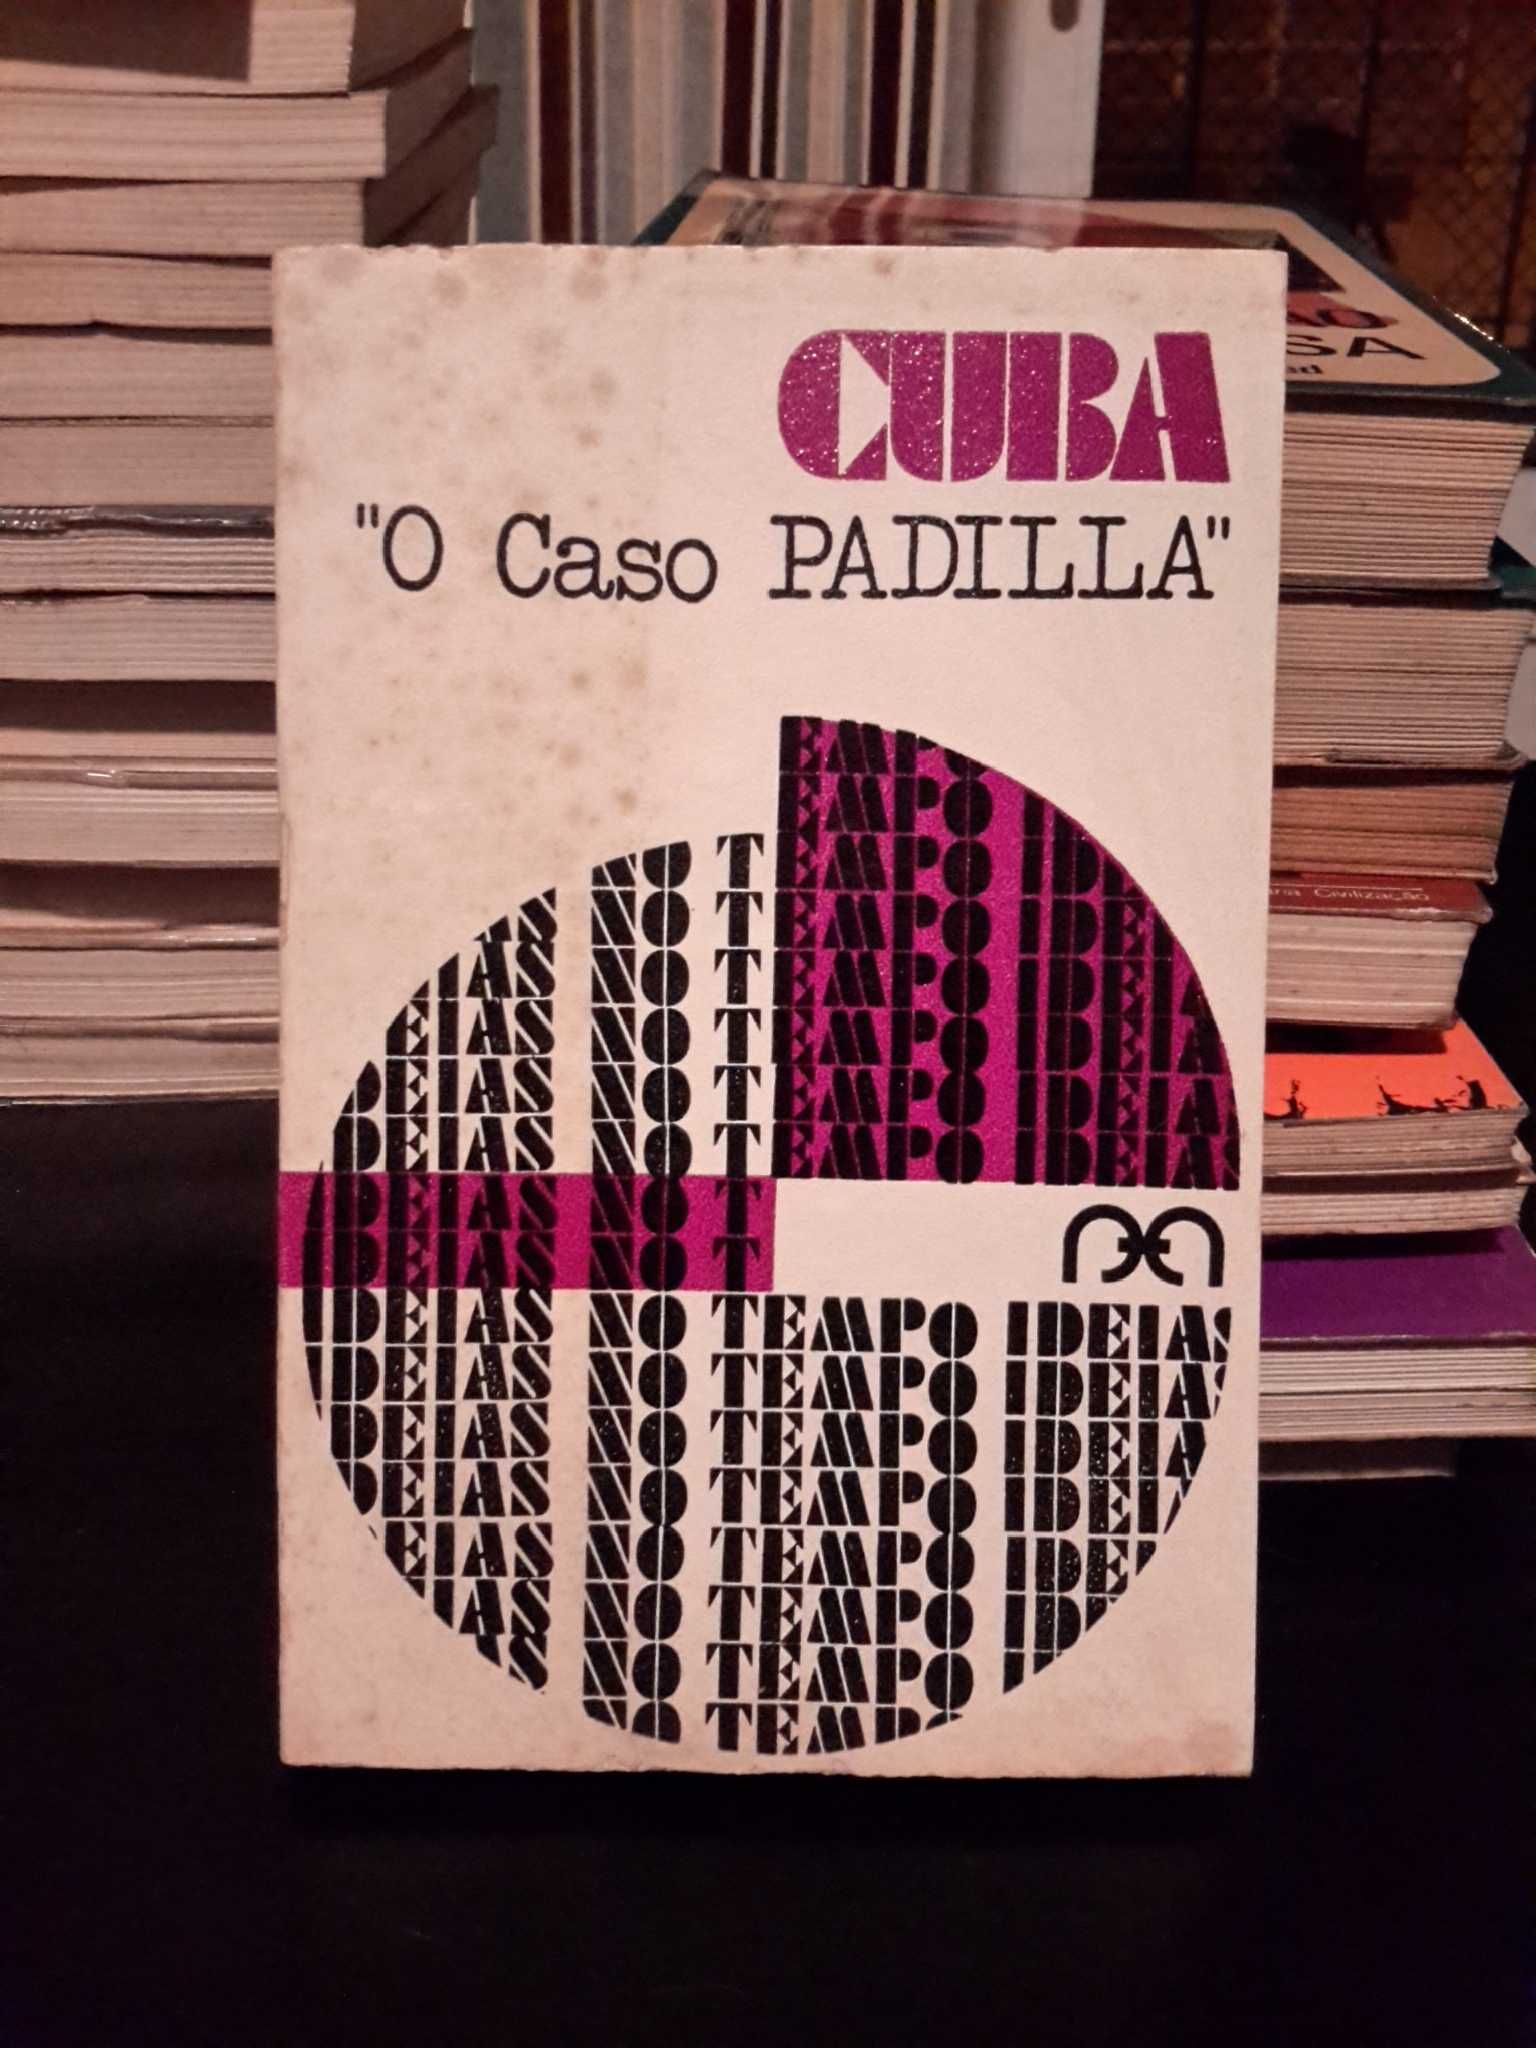 Cuba - O Caso "Padilla"